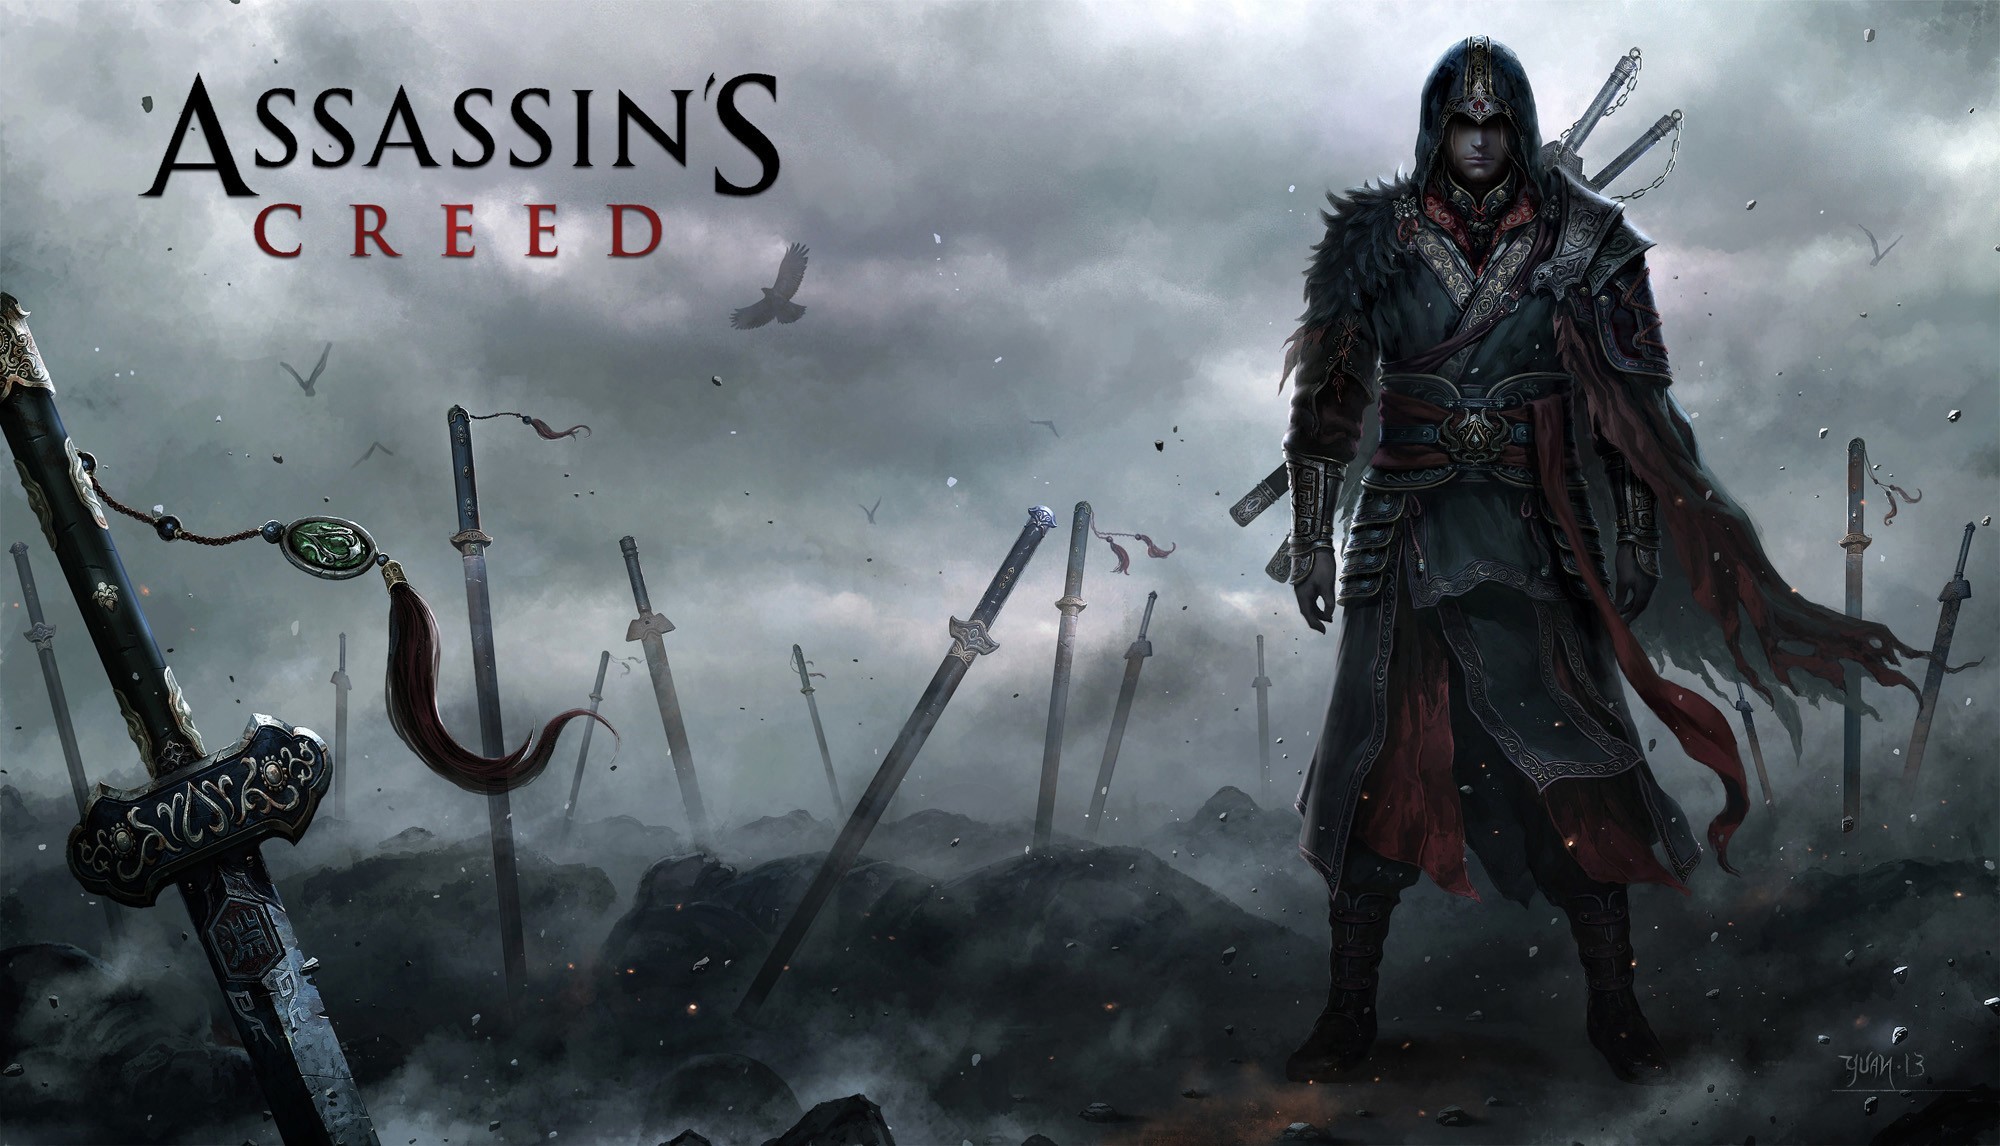 Assassin's Creed 3 Connor Running 4K Wallpaper - Best Wallpapers